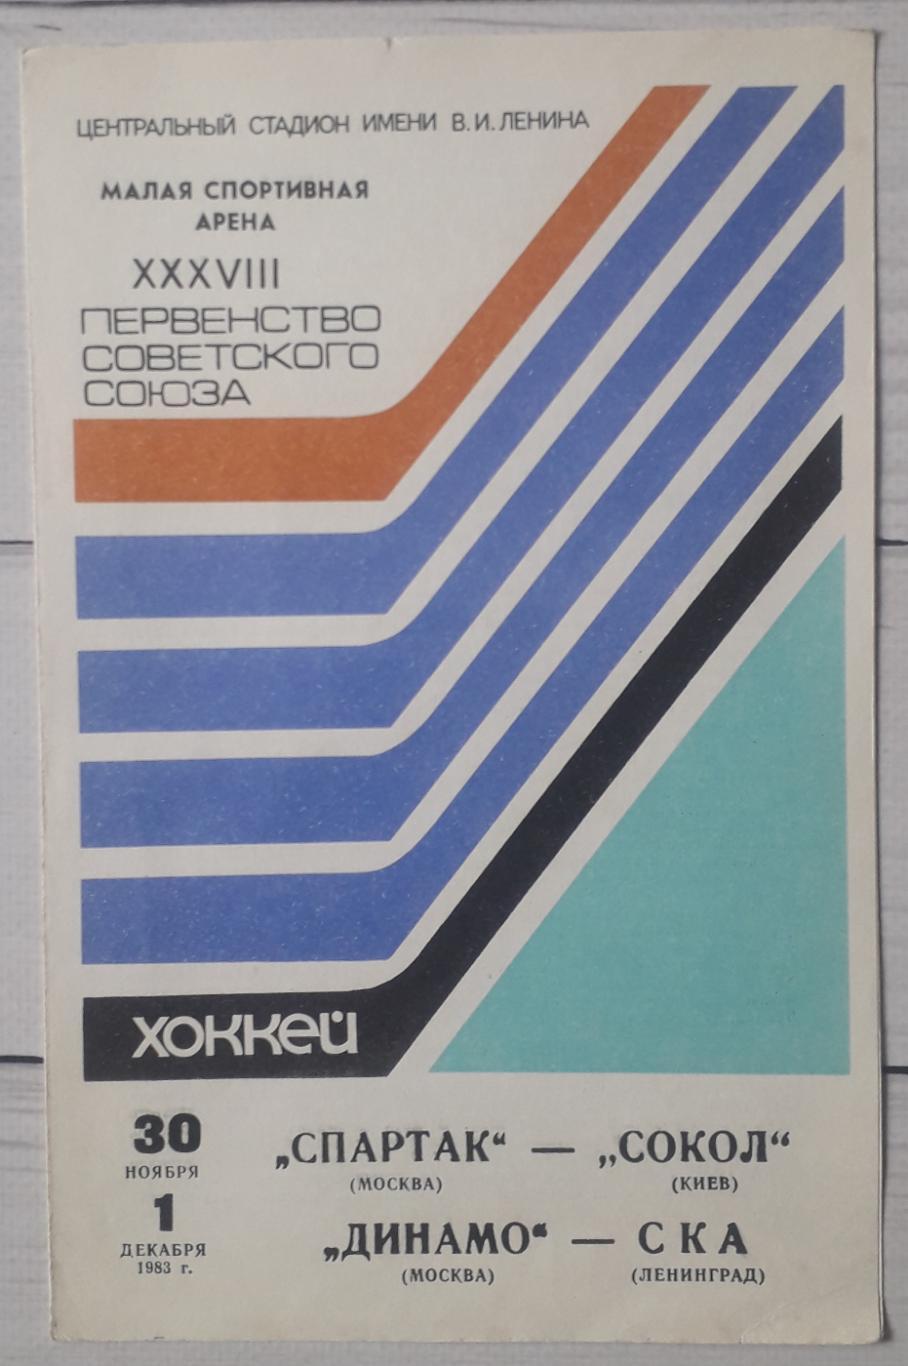 Спартак Москва – Сокол Киев 30.11.1983 Динамо Москва – СКА Ленинград 01.12.1983